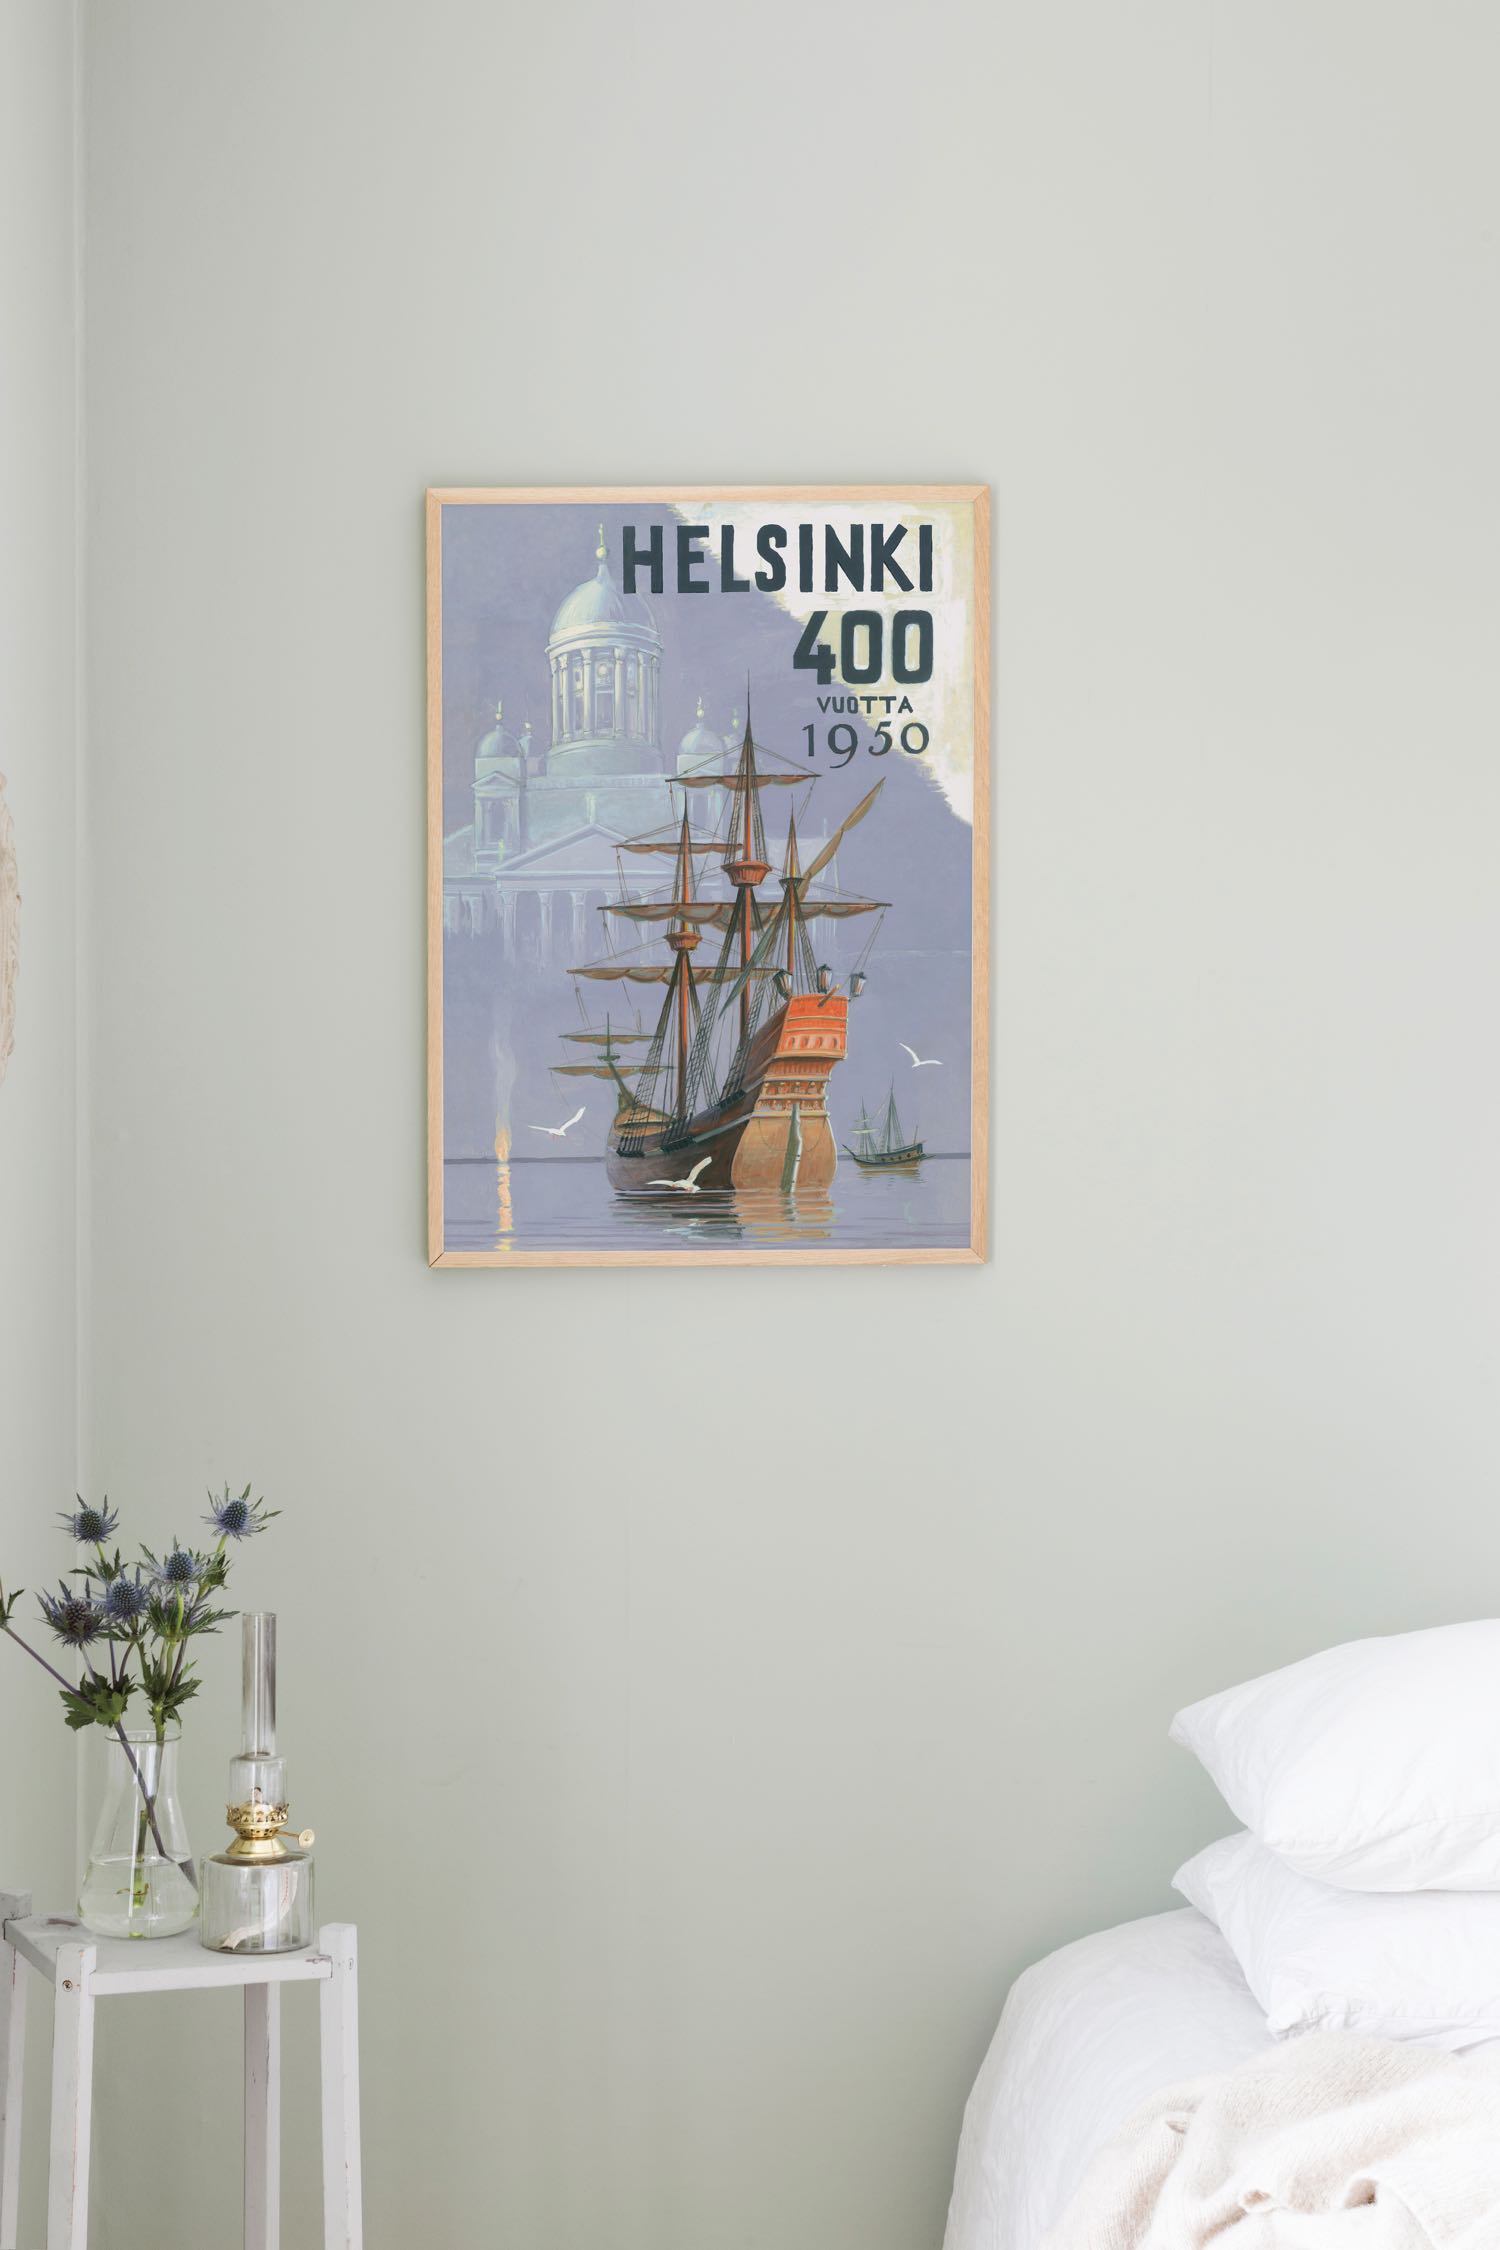 Poster of Helsinki 400 years